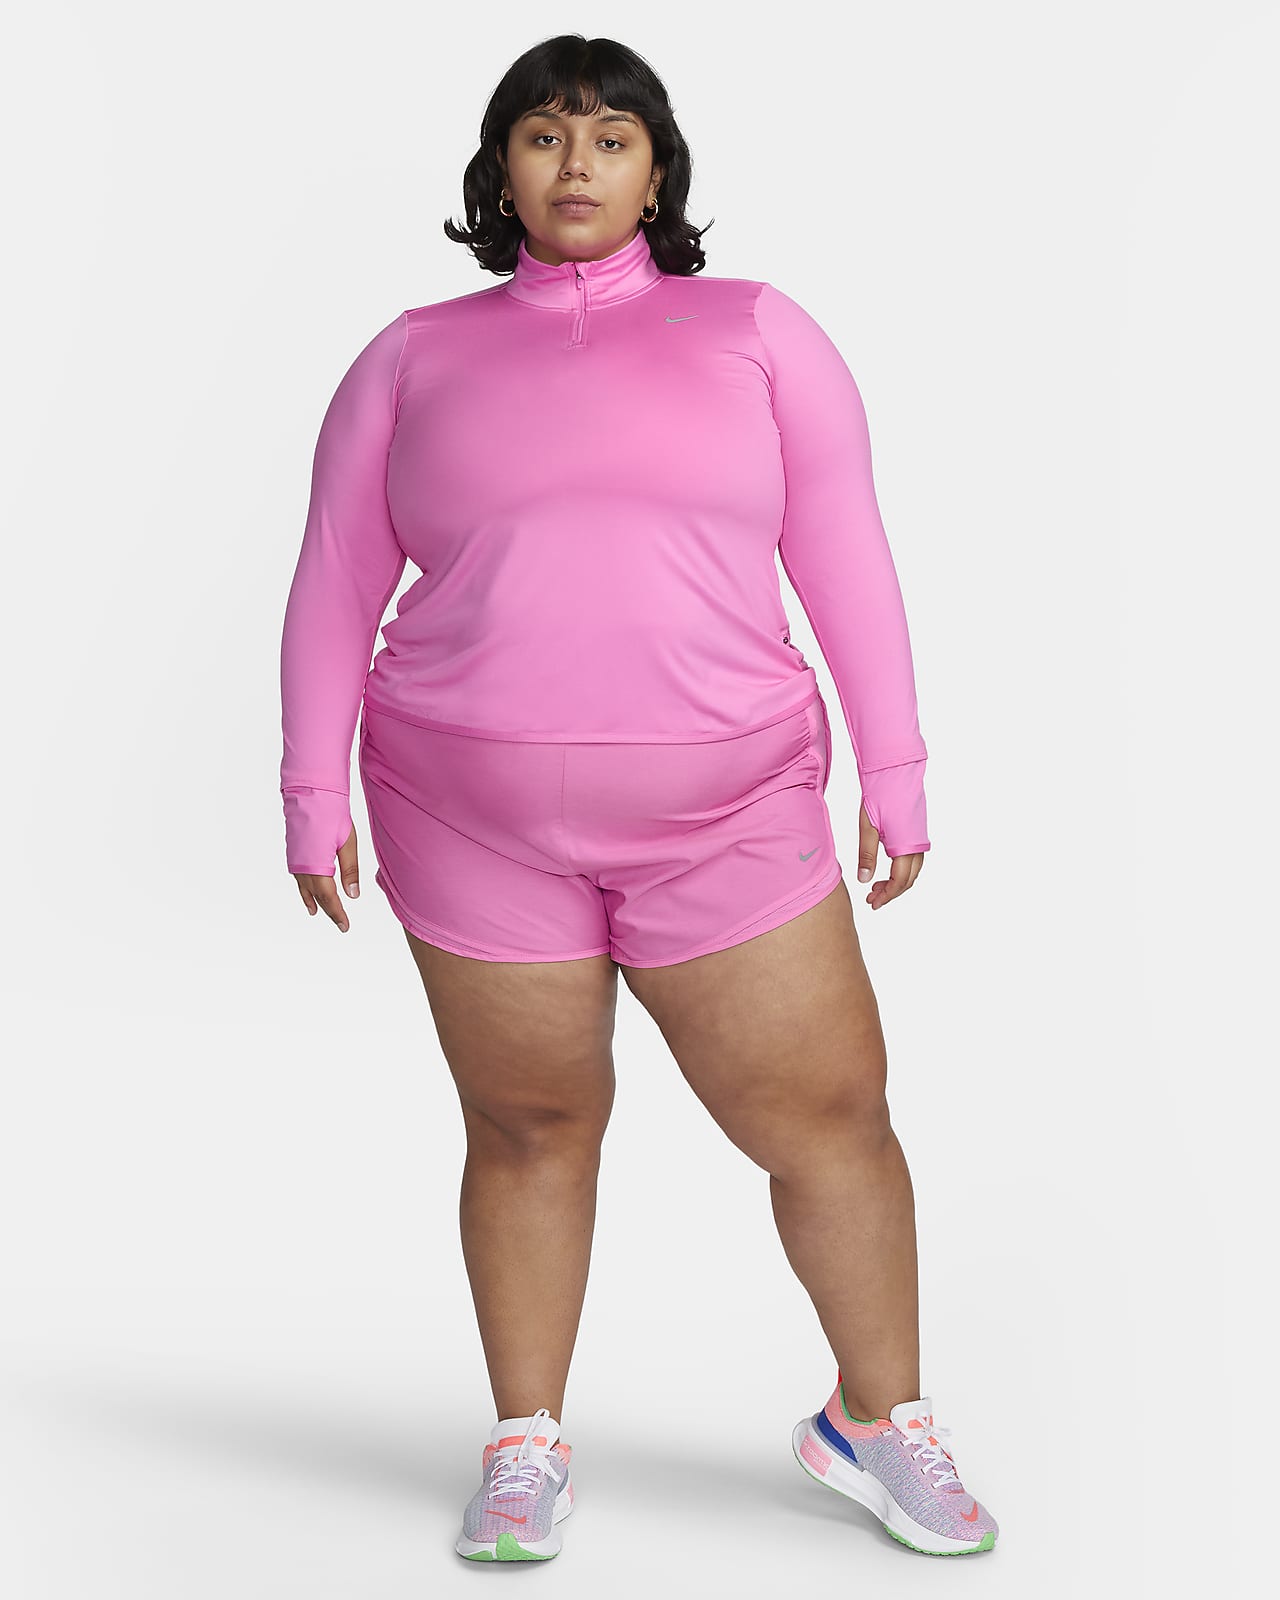 Plus Size - Top Nike Dri-FIT Indy Feminino - Rosa